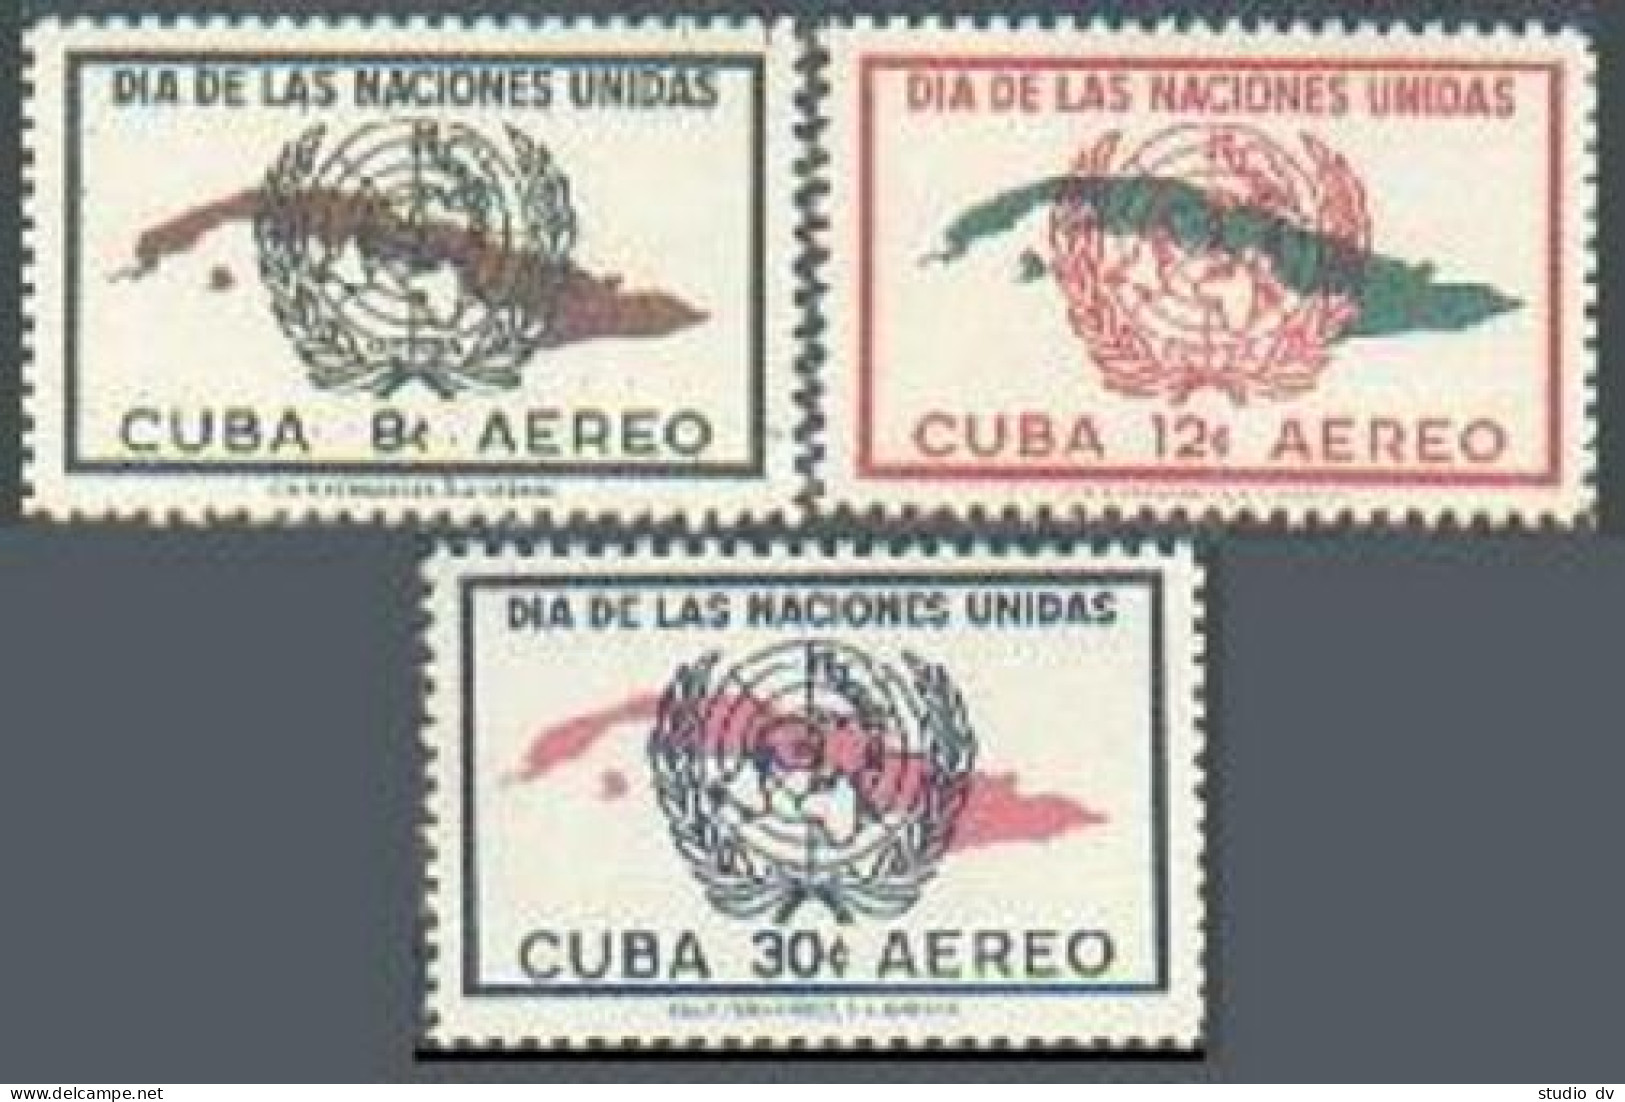 Cuba C169-C171,MNH.Michel 554-556. United Nations Day 1957,Map,emblem. - Unused Stamps